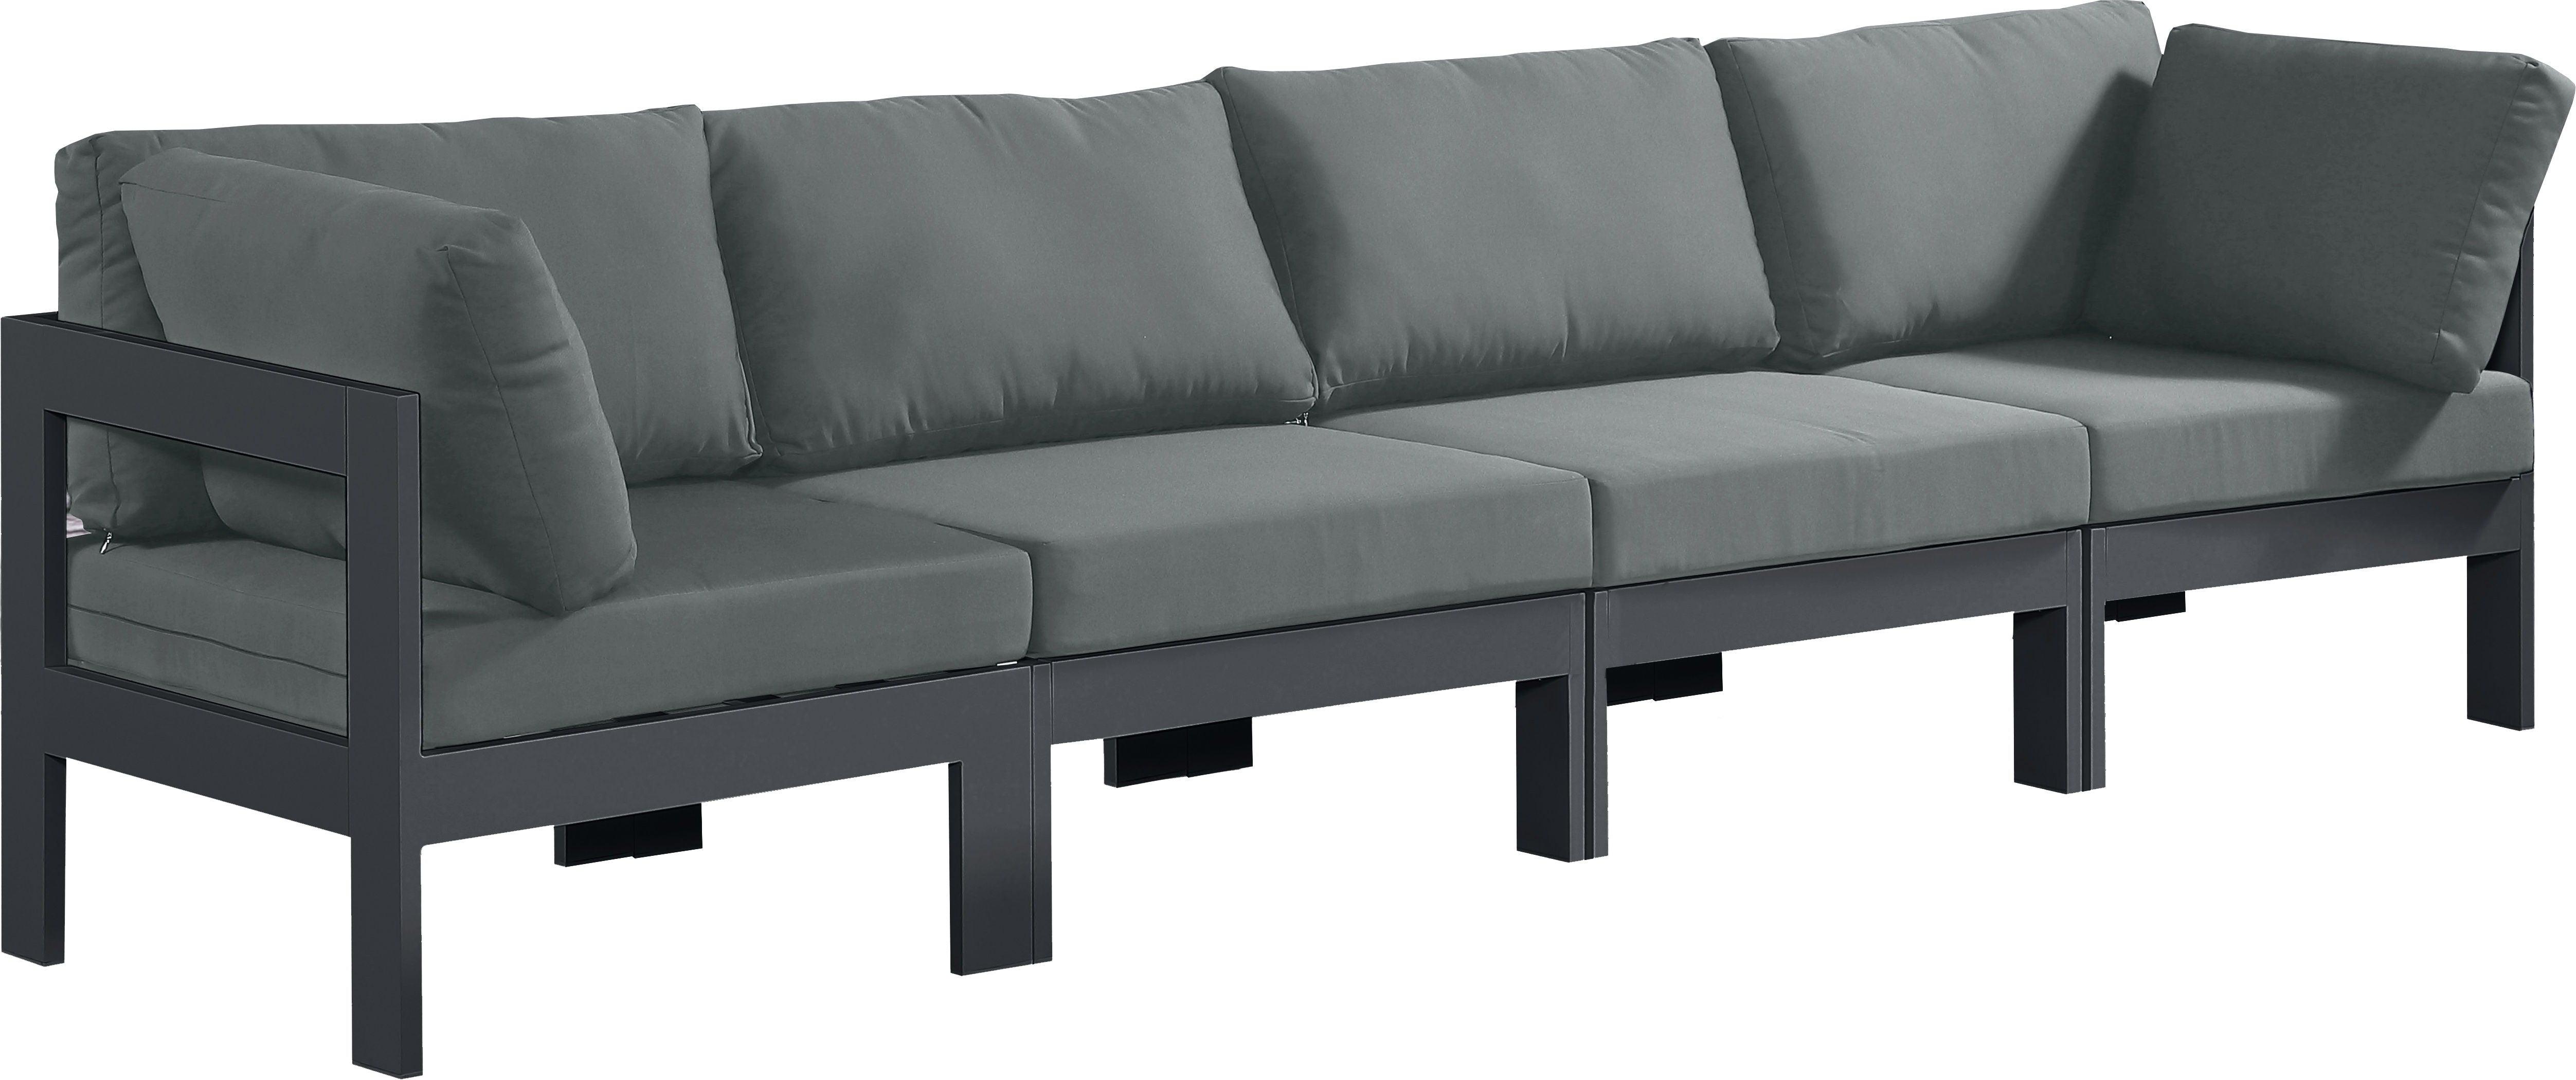 Meridian Furniture - Nizuc - Outdoor Patio Modular Sofa - Dark Grey - Modern & Contemporary - 5th Avenue Furniture